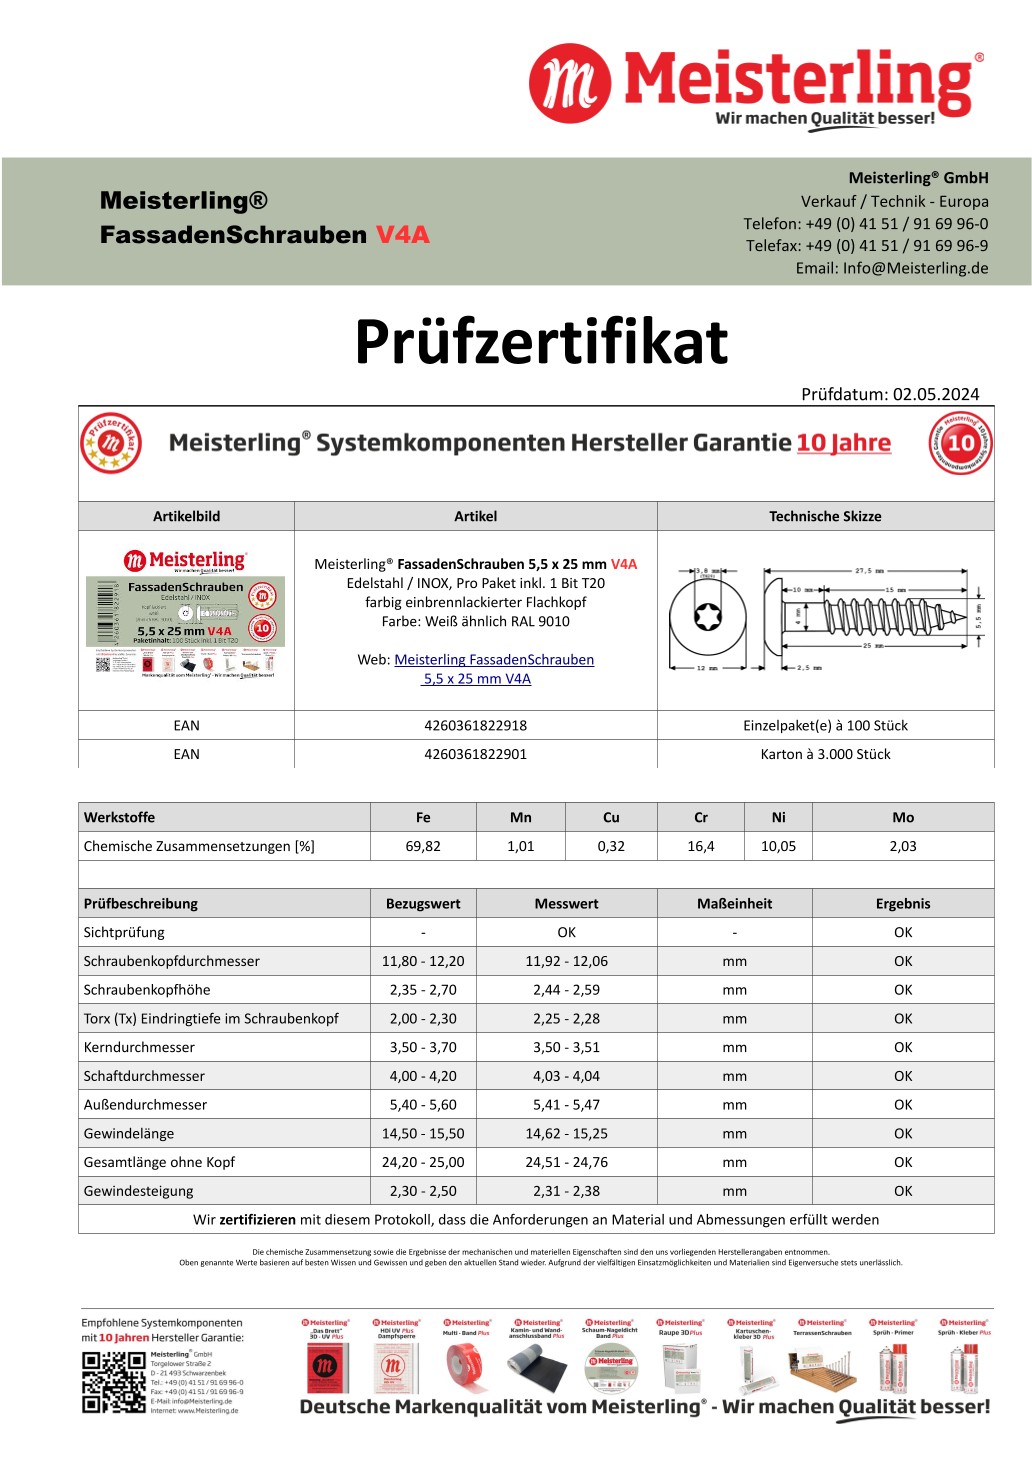 Prüfzertifikat Meisterling® FassadenSchrauben 5,5 x 25 mm V4a weiß